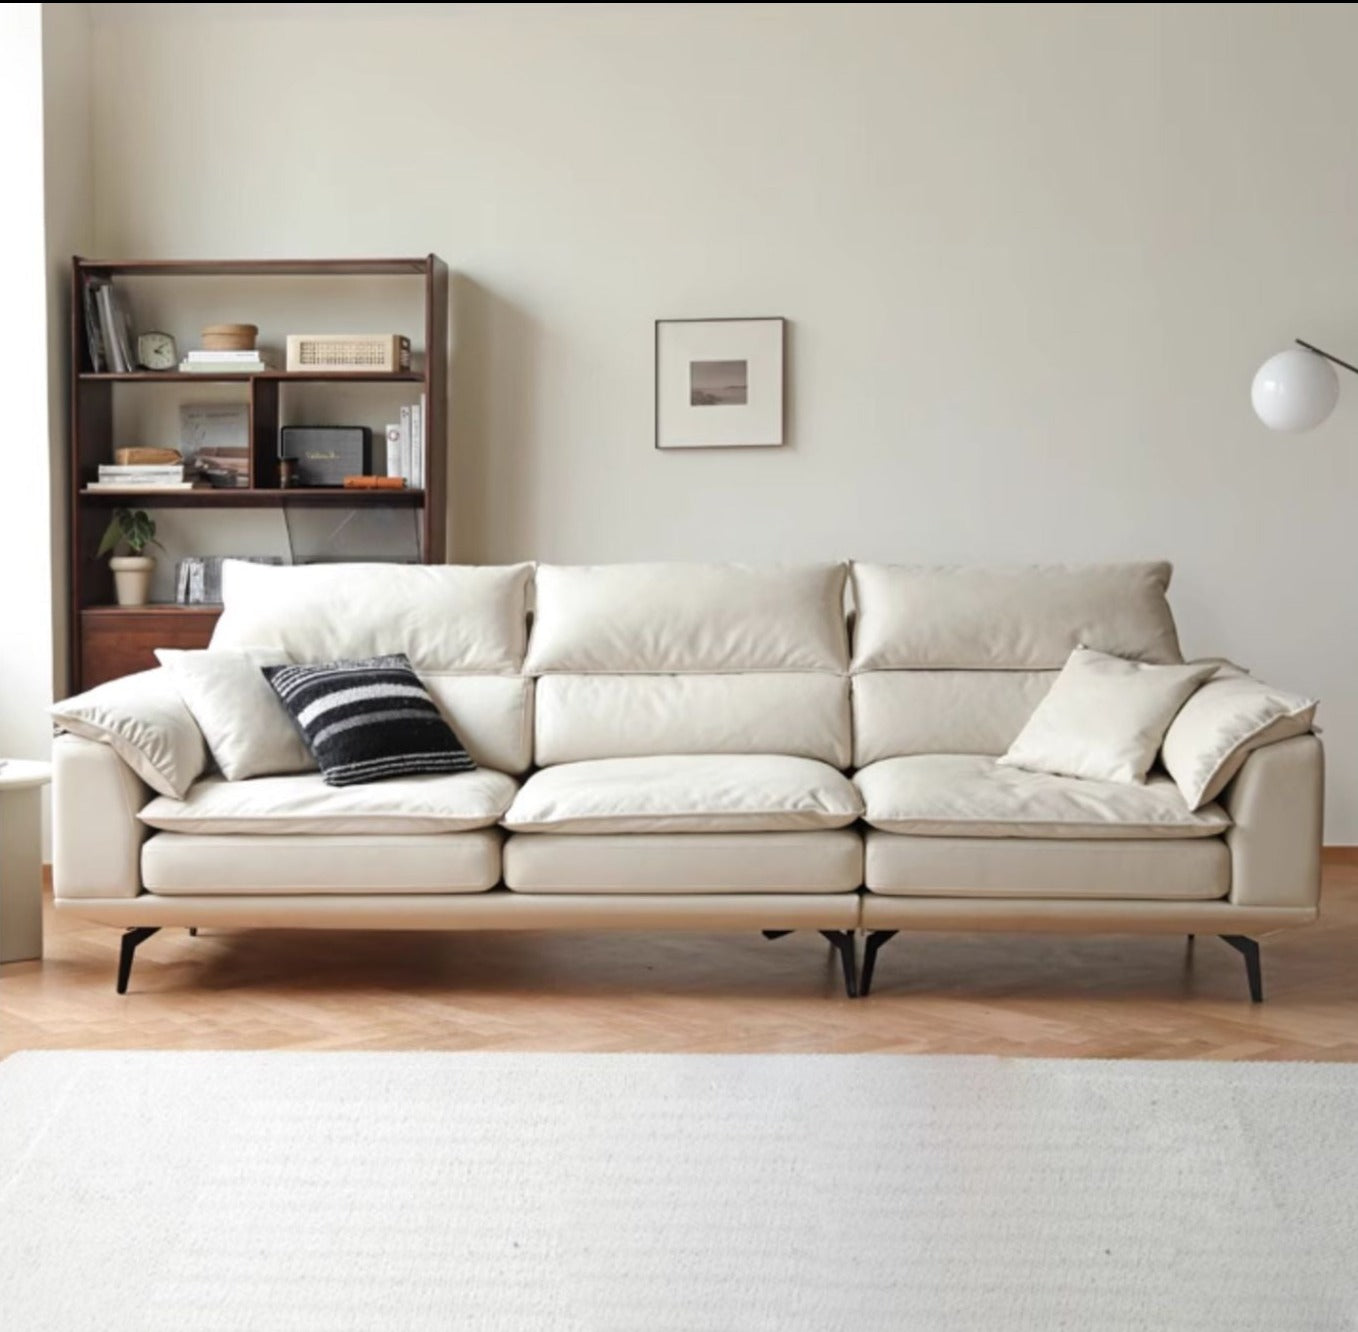 Technology Fabric Down Sofa White Soft+